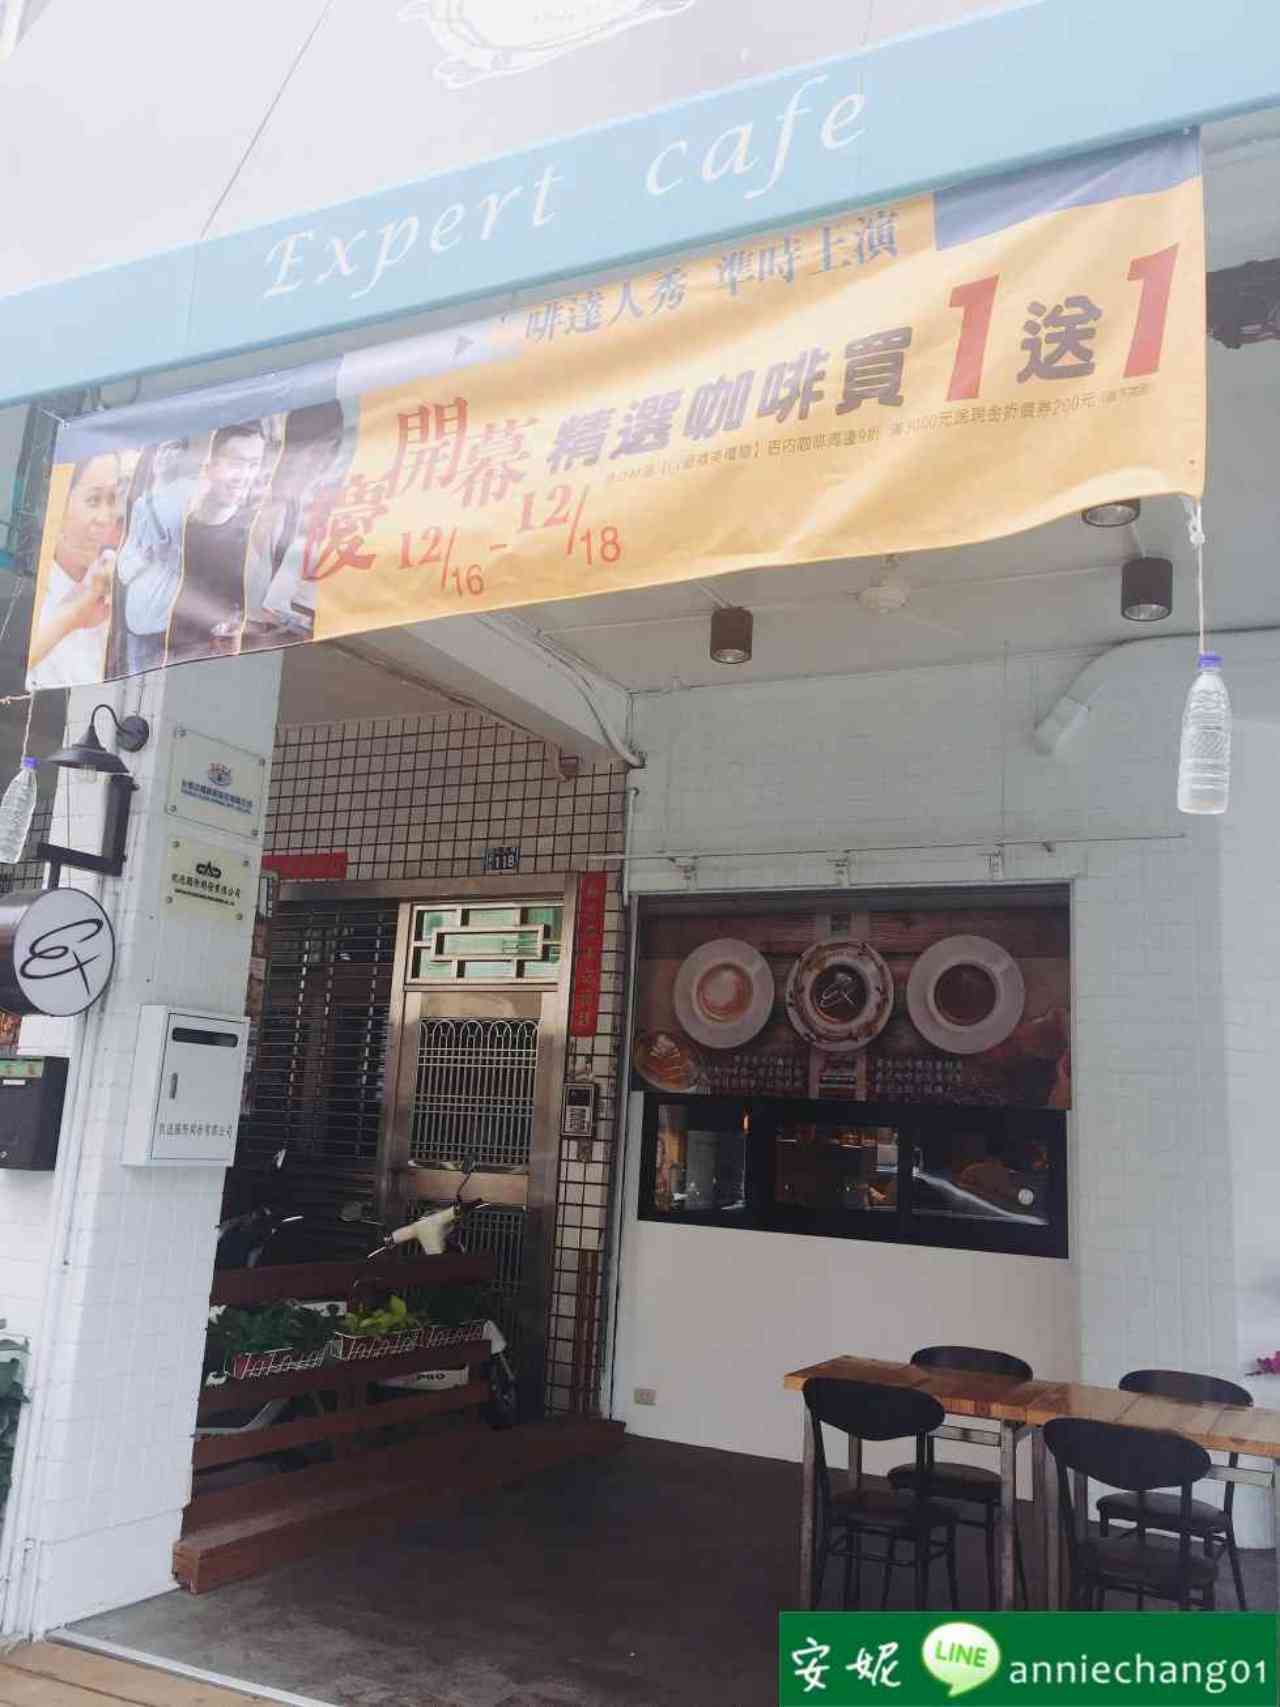 【台中】Expert Cafe